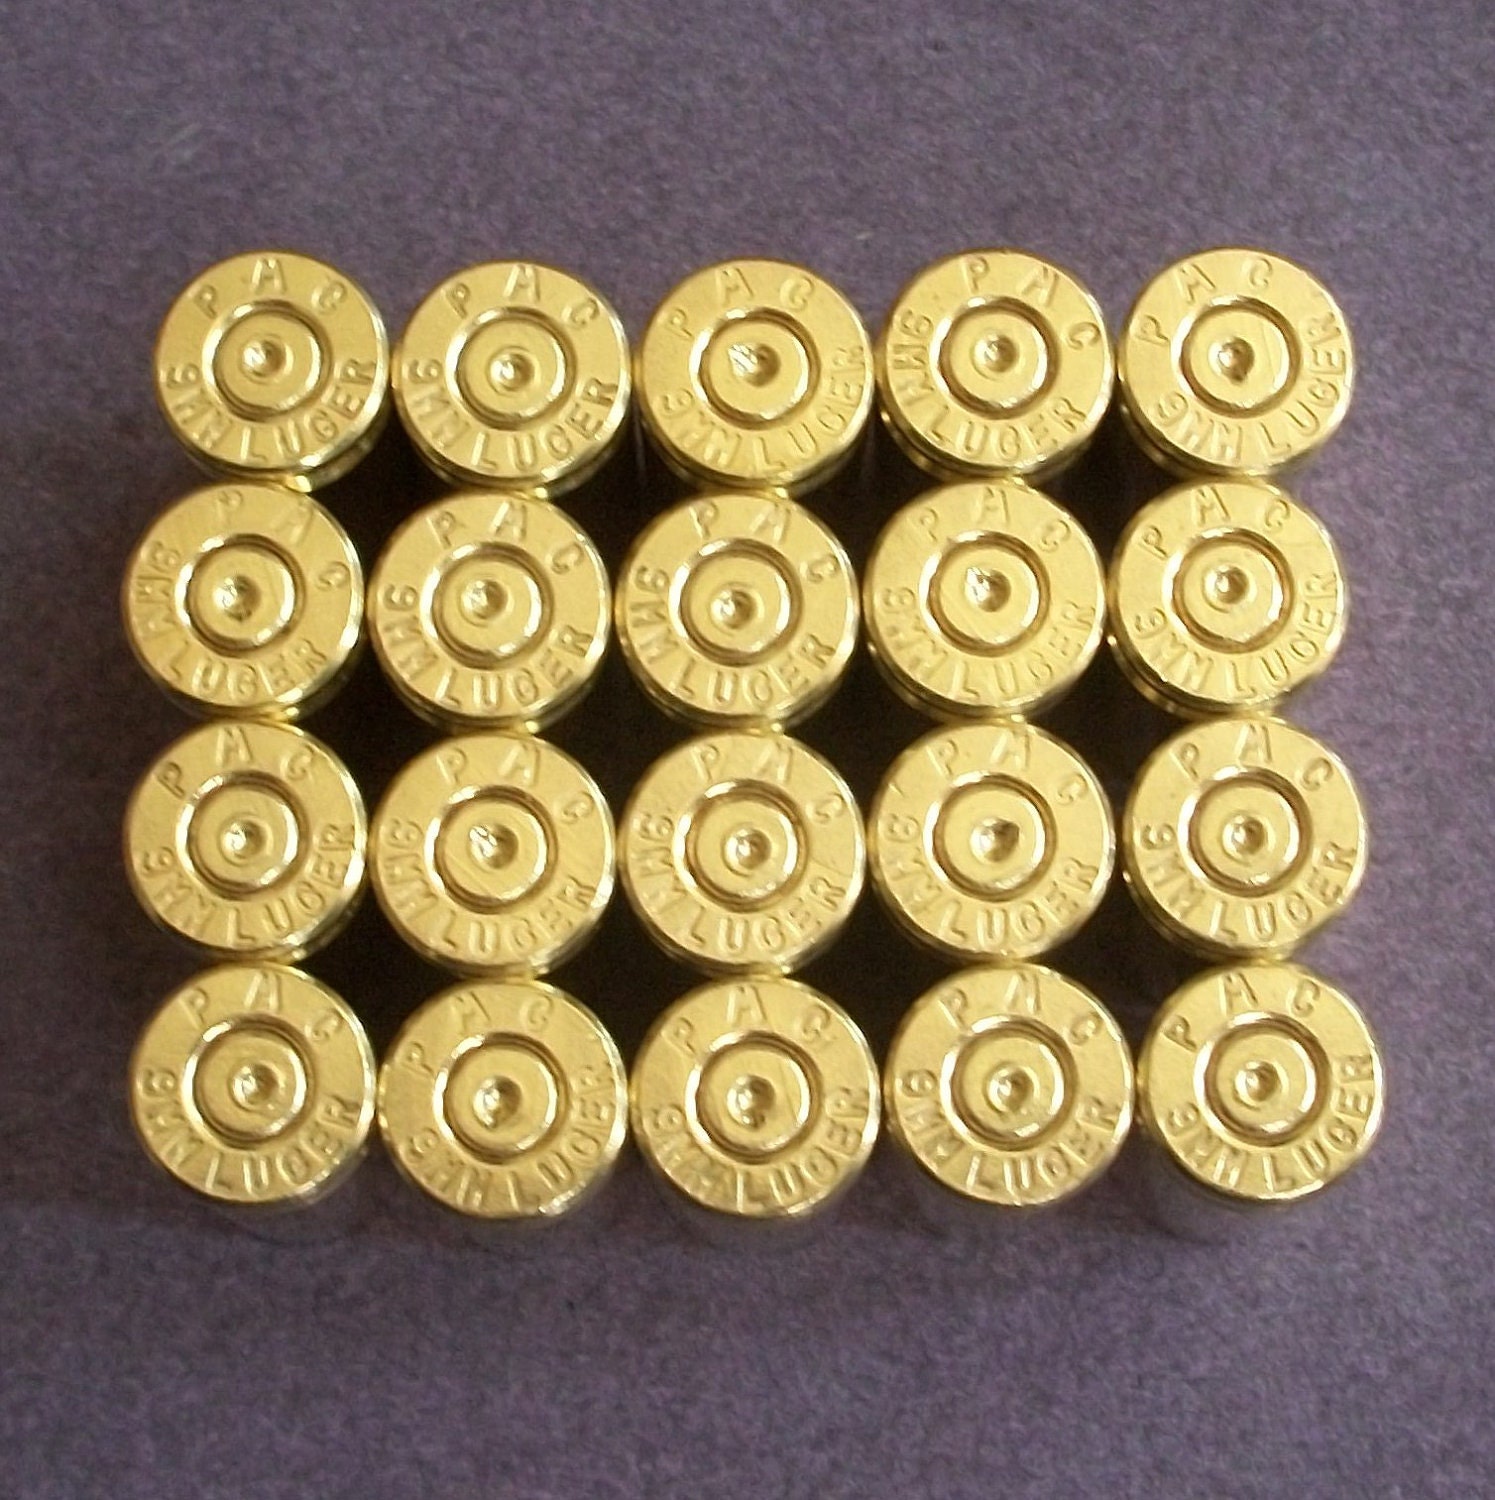 ammoload 9mm brass